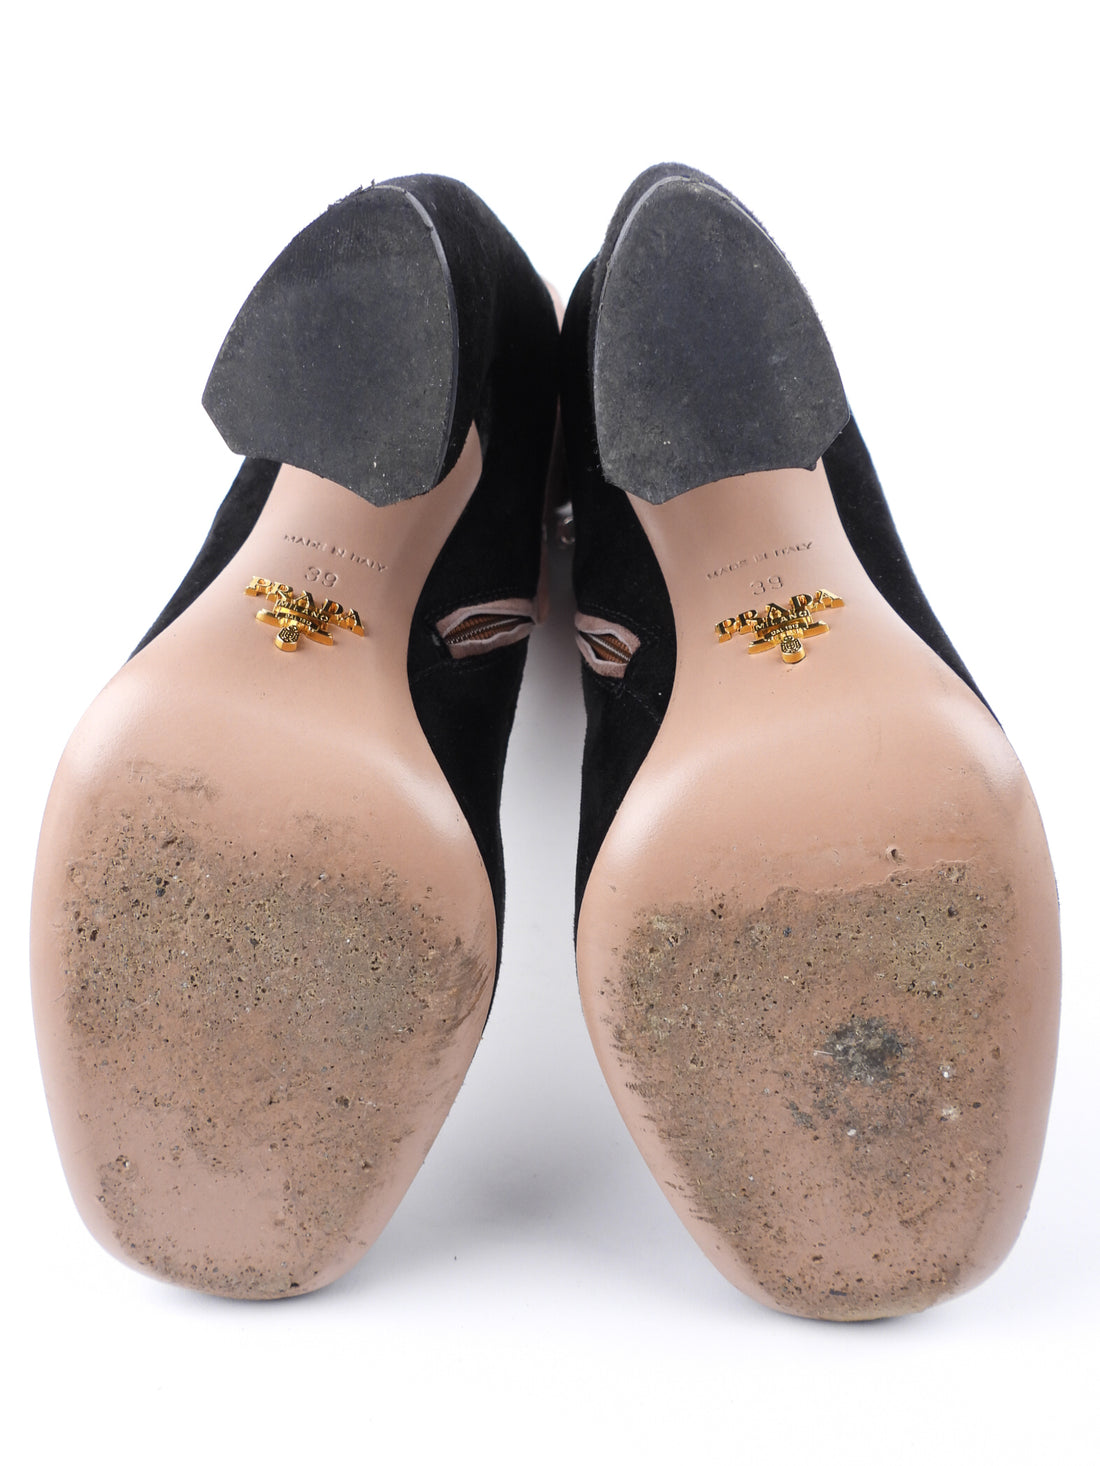 Prada Dusty Rose and Black Bi-Color Suede Leather Knee High Block Heel Boots - 39